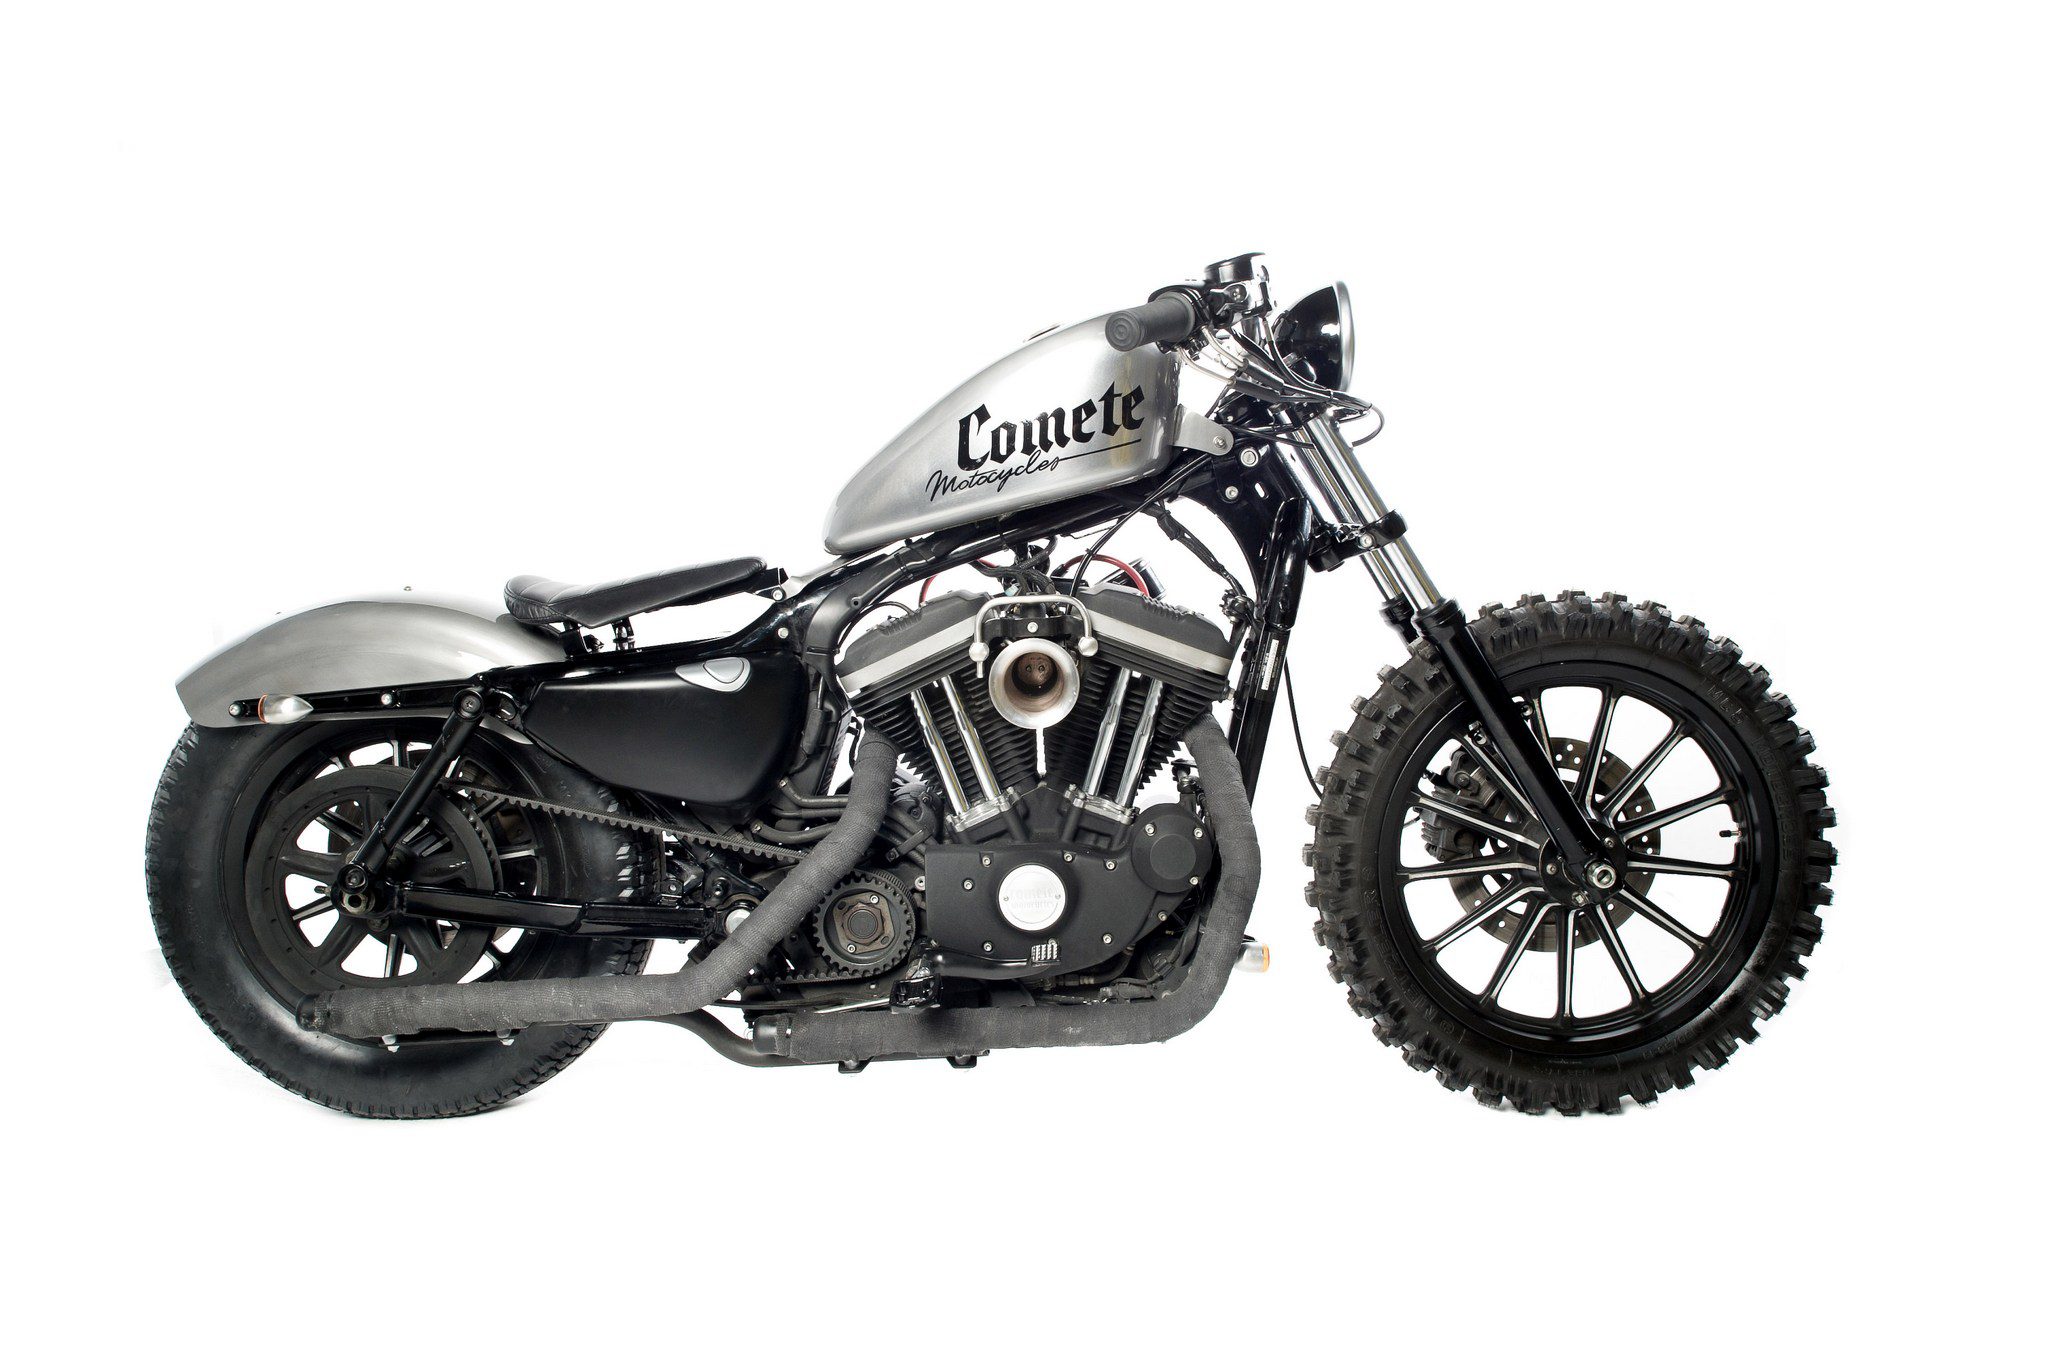 A custom Harley Davidson Motorcycle Bobber